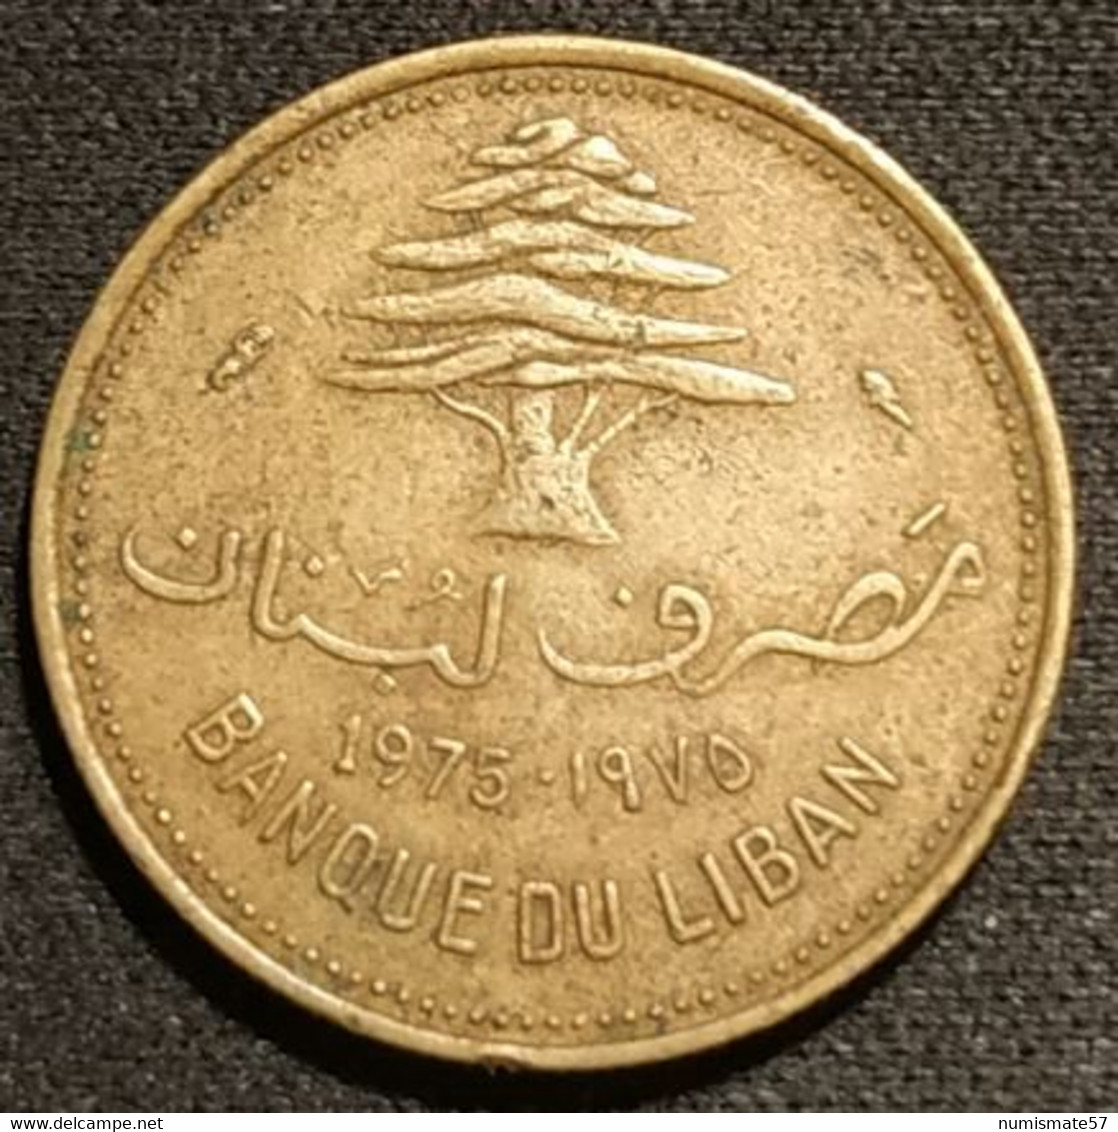 LIBAN - LEBANON - 10 PIASTRES 1975 - KM 26 - Lebanon